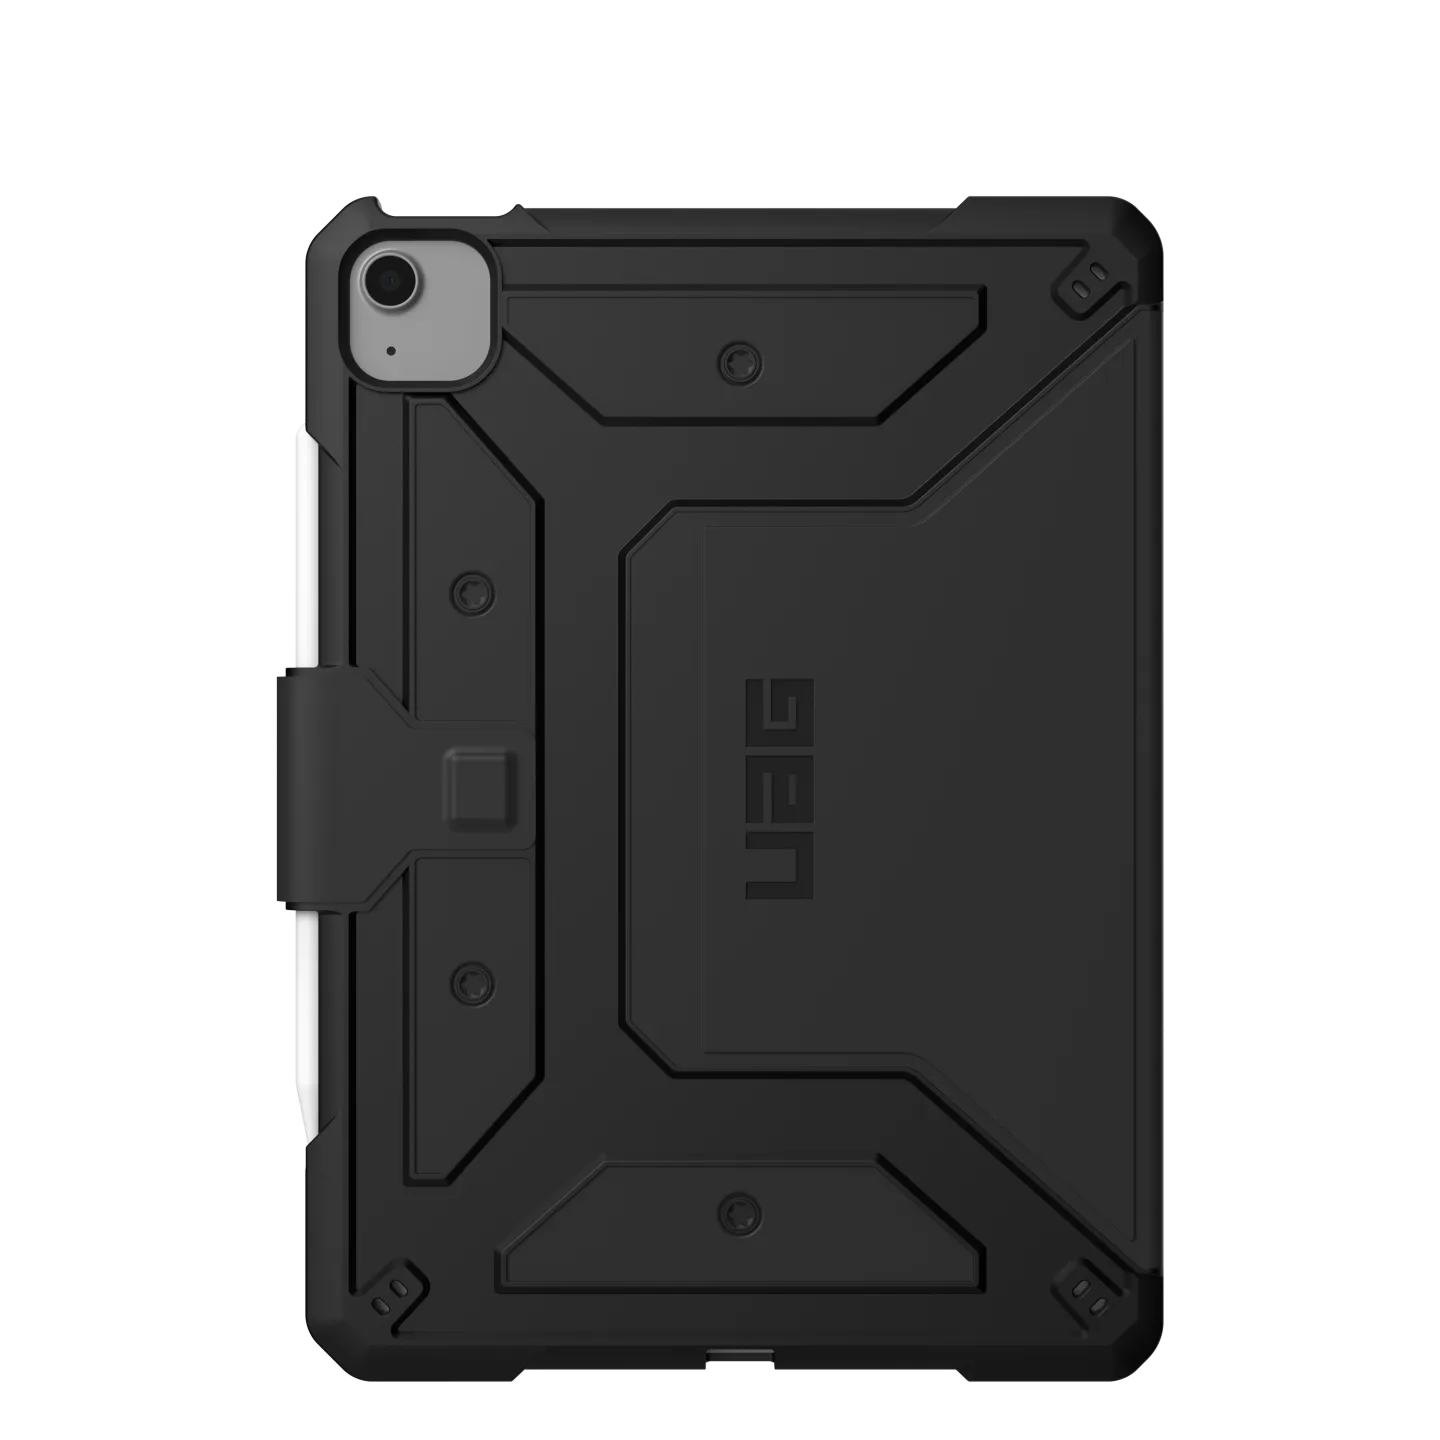 Urban Armor Gear Metropolis SE Case for iPad Air 5th Generation (Black)